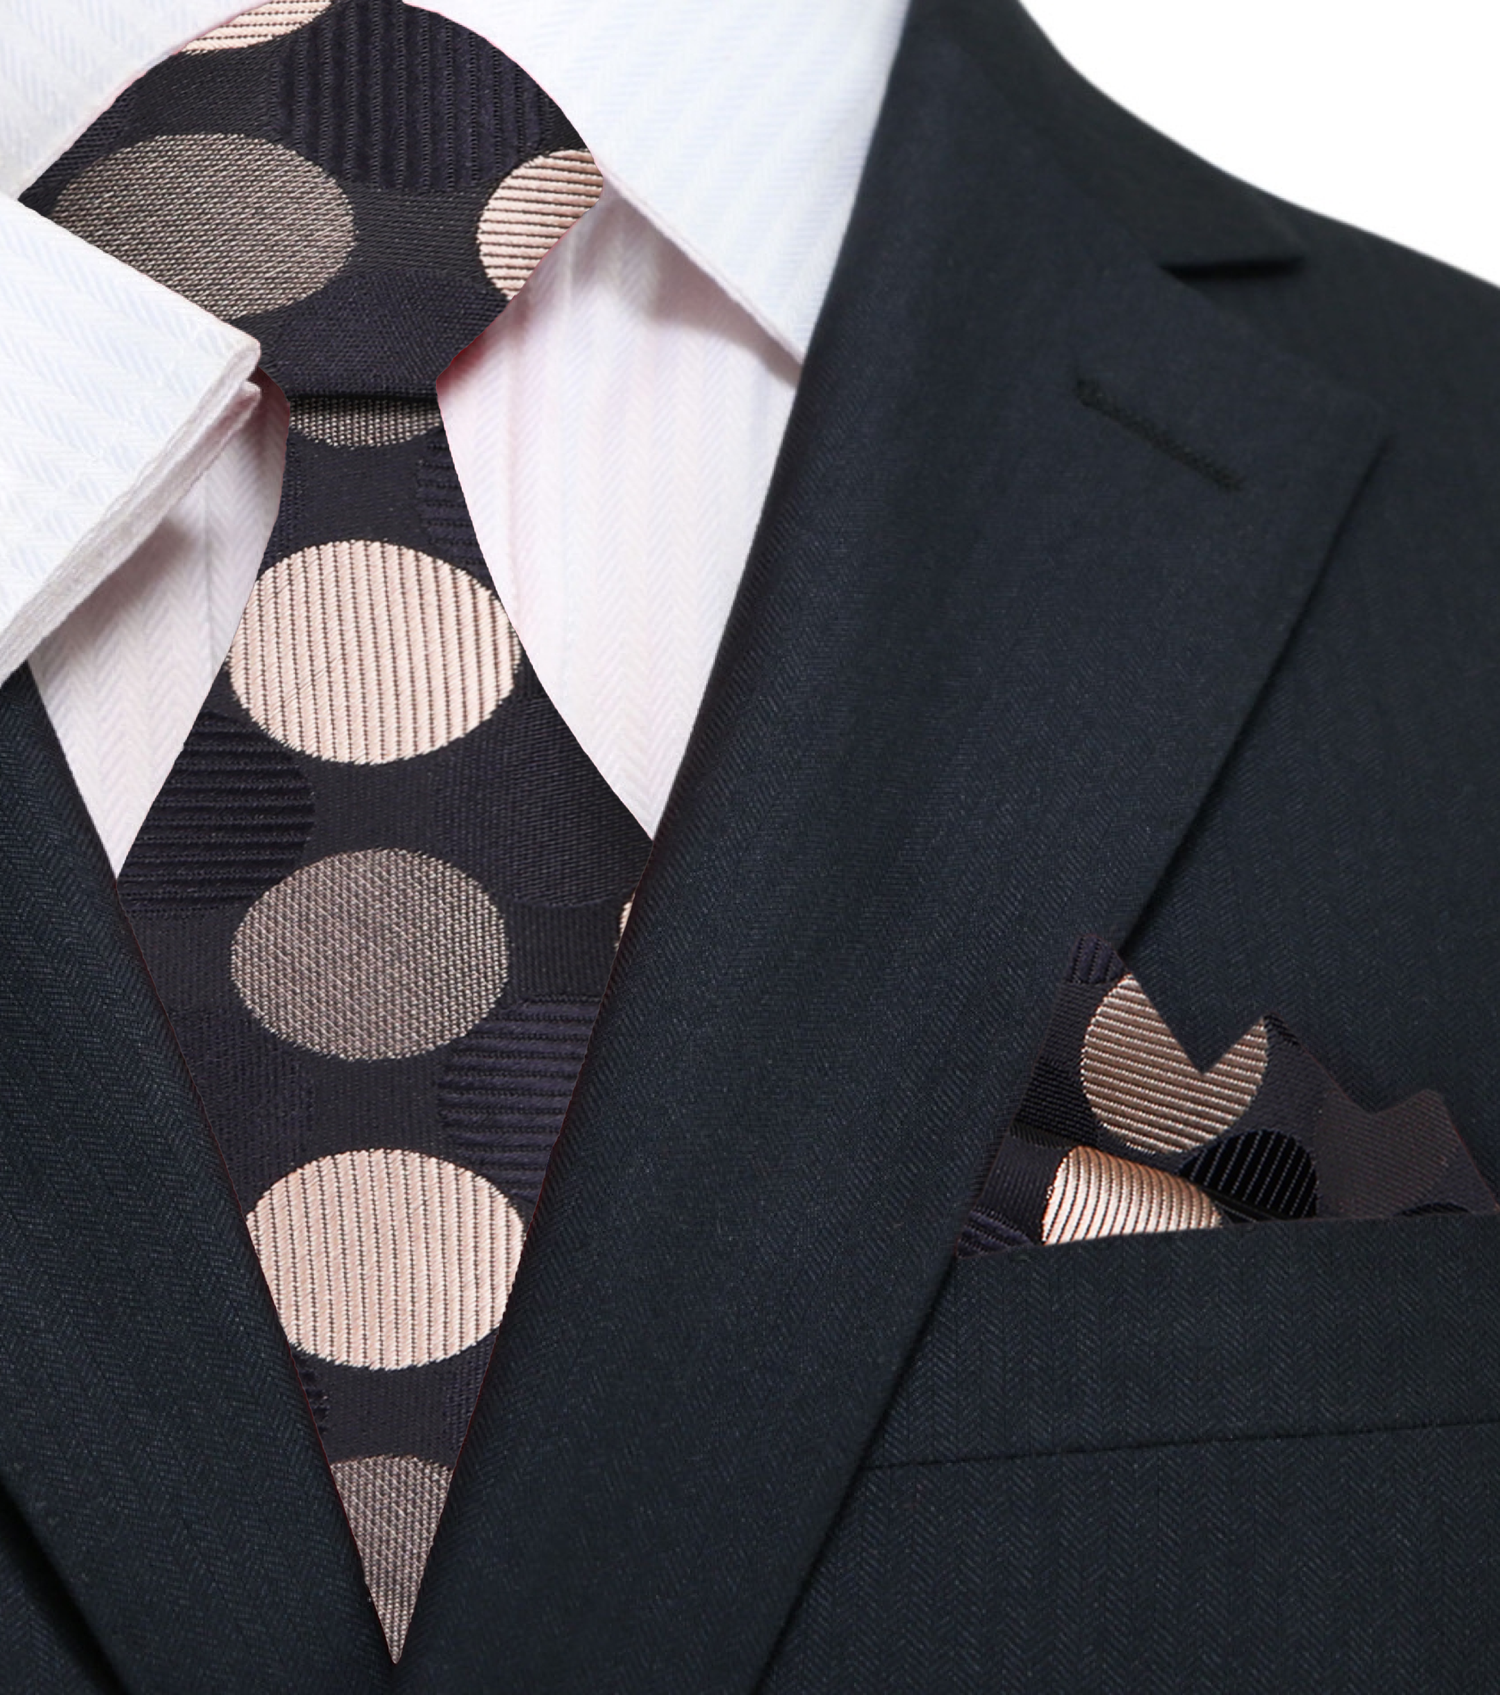 Main A Black, Brown, Gold Large Polka Dot Pattern Silk Necktie With Matching Pocket Square||Black, Tan, Gold